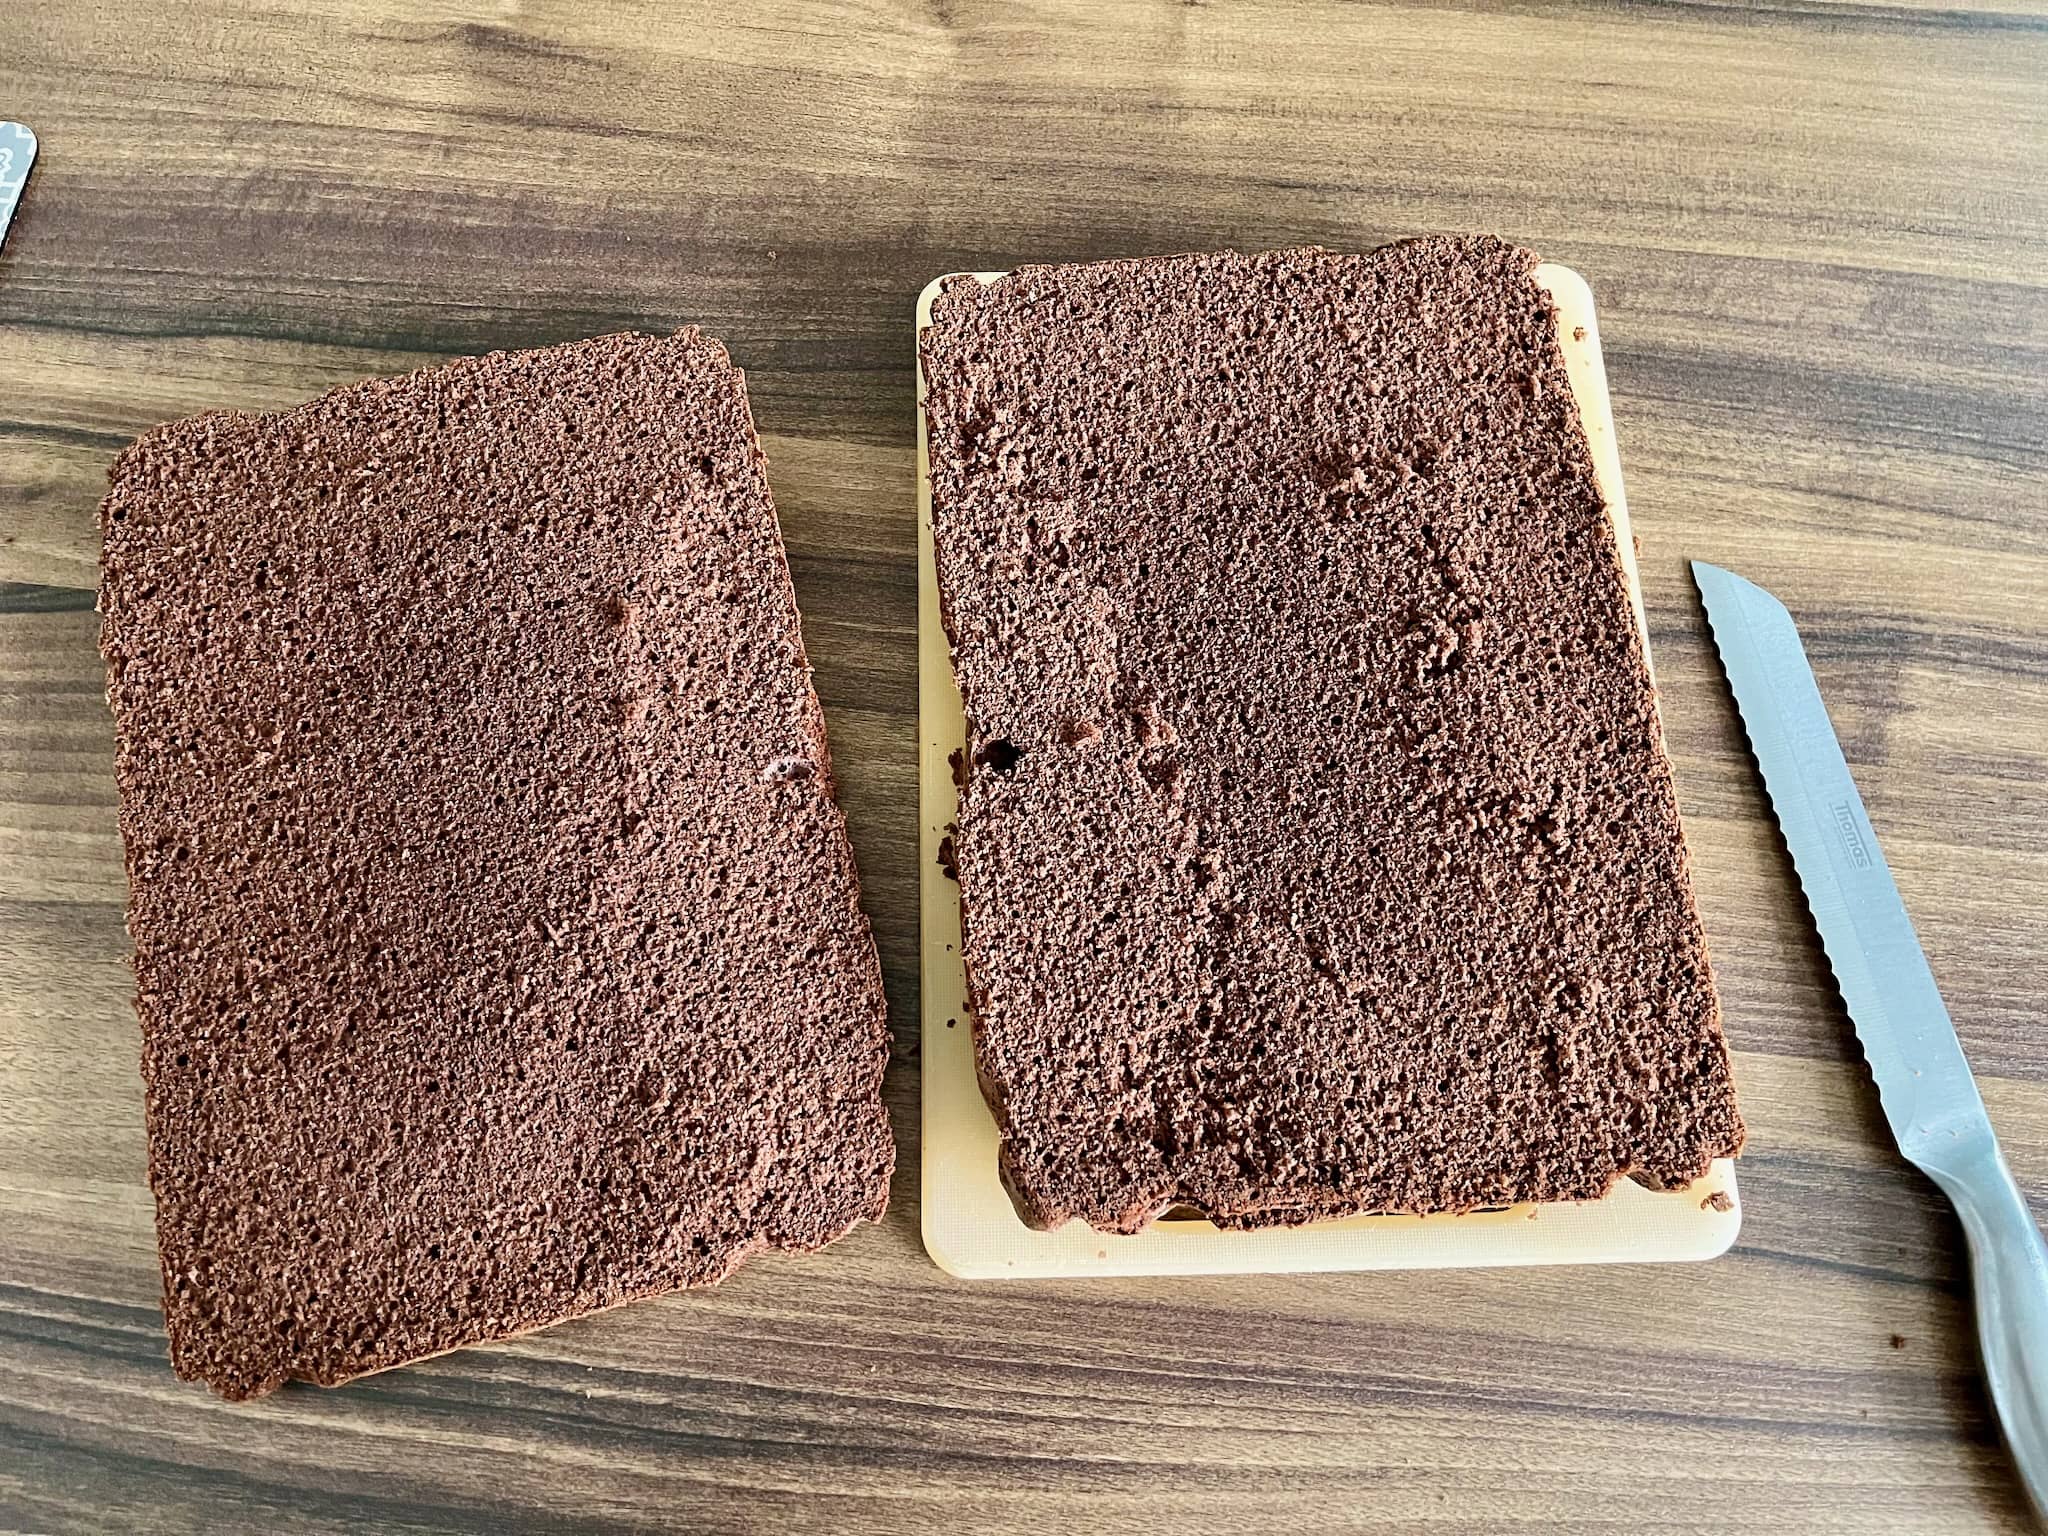 Sponge cake cut horizontally into two parts